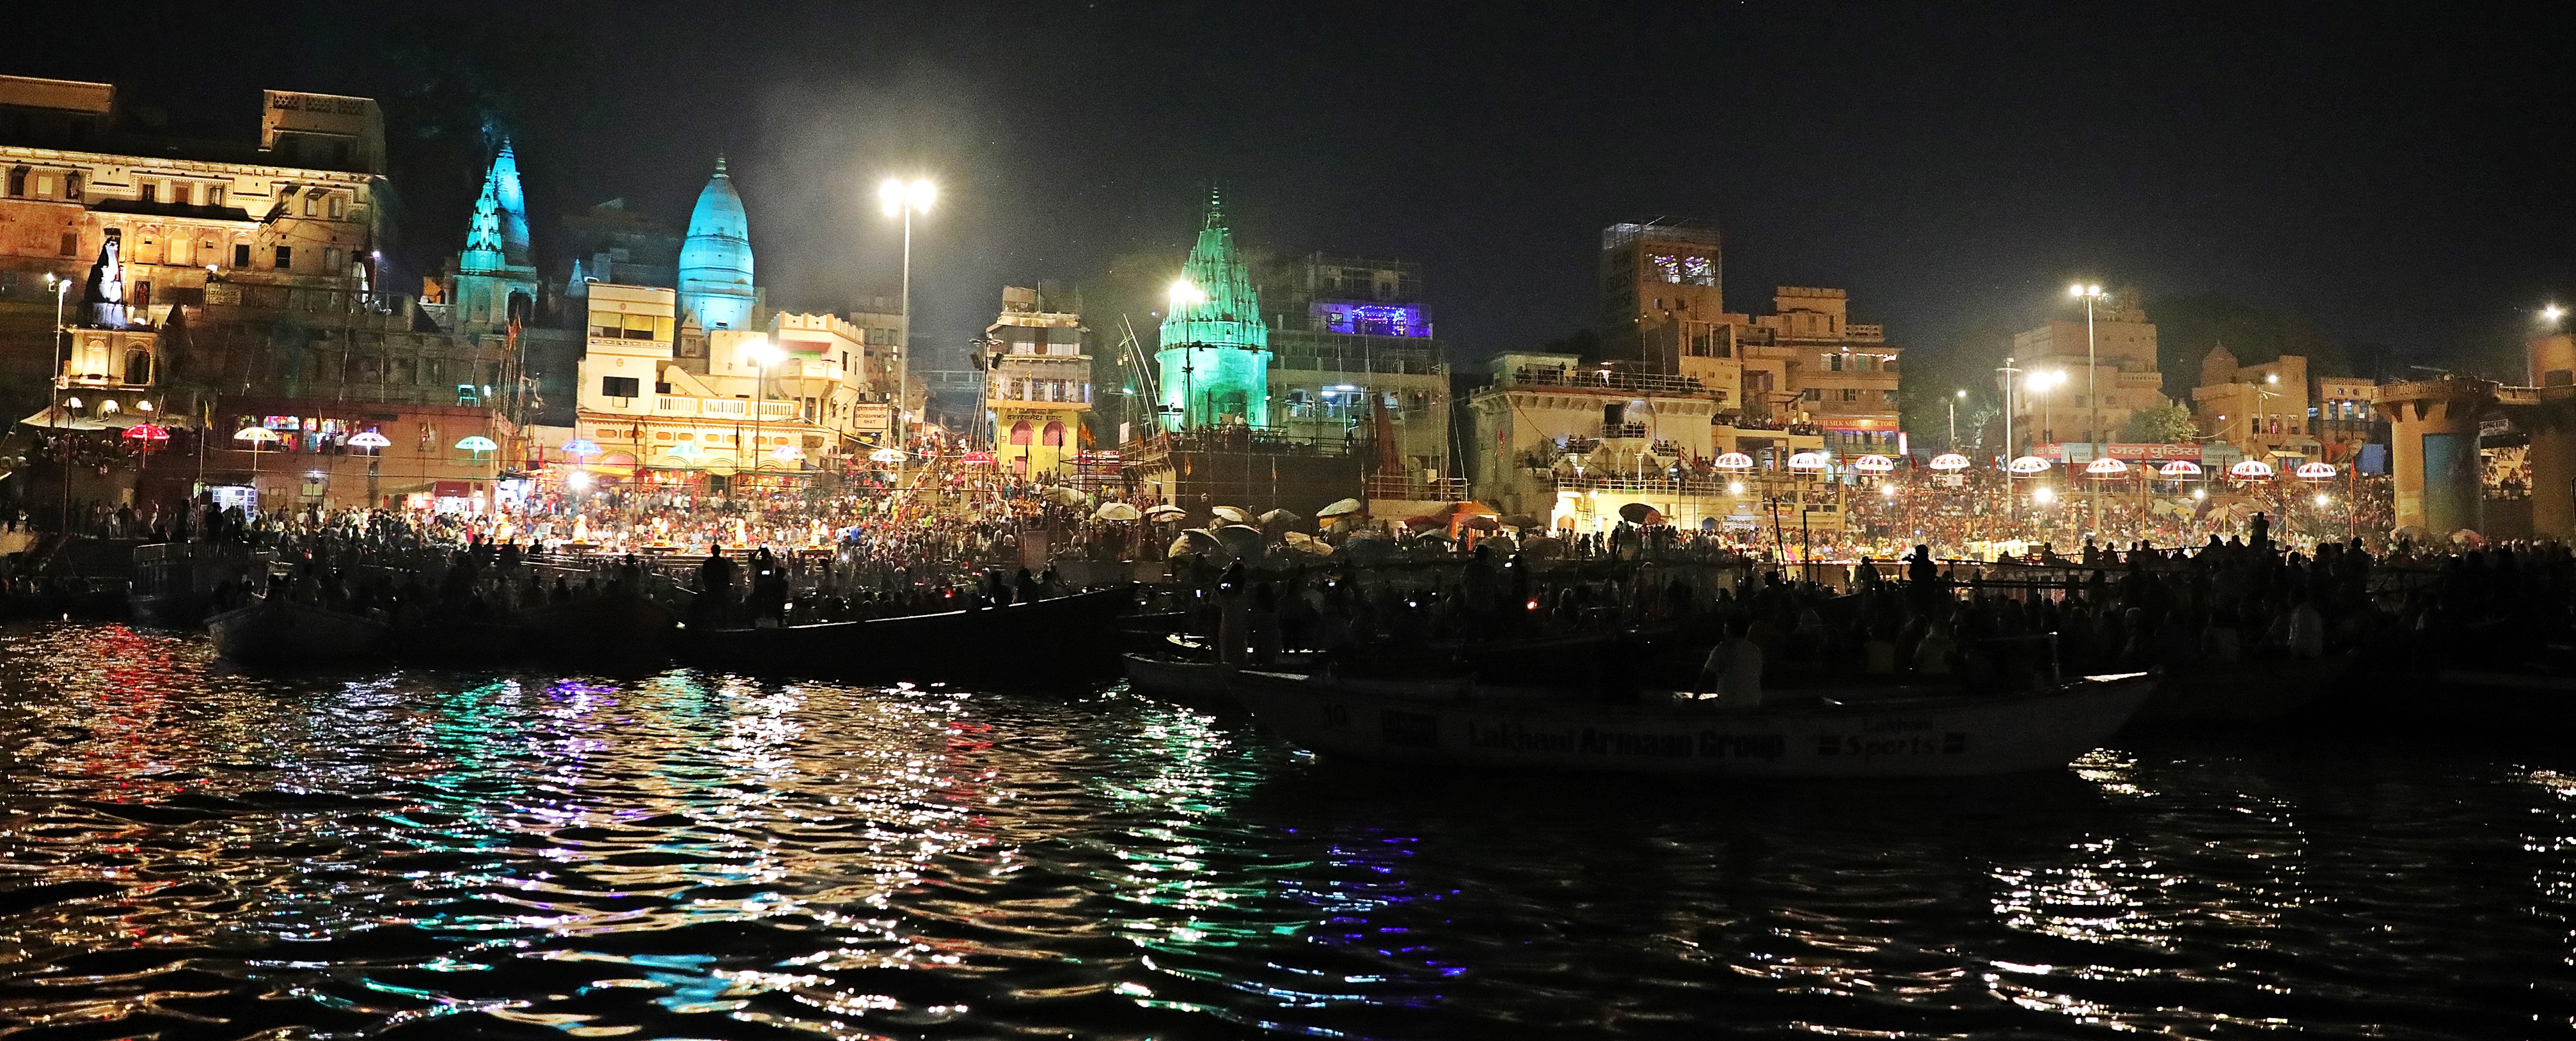 Varanasi at night